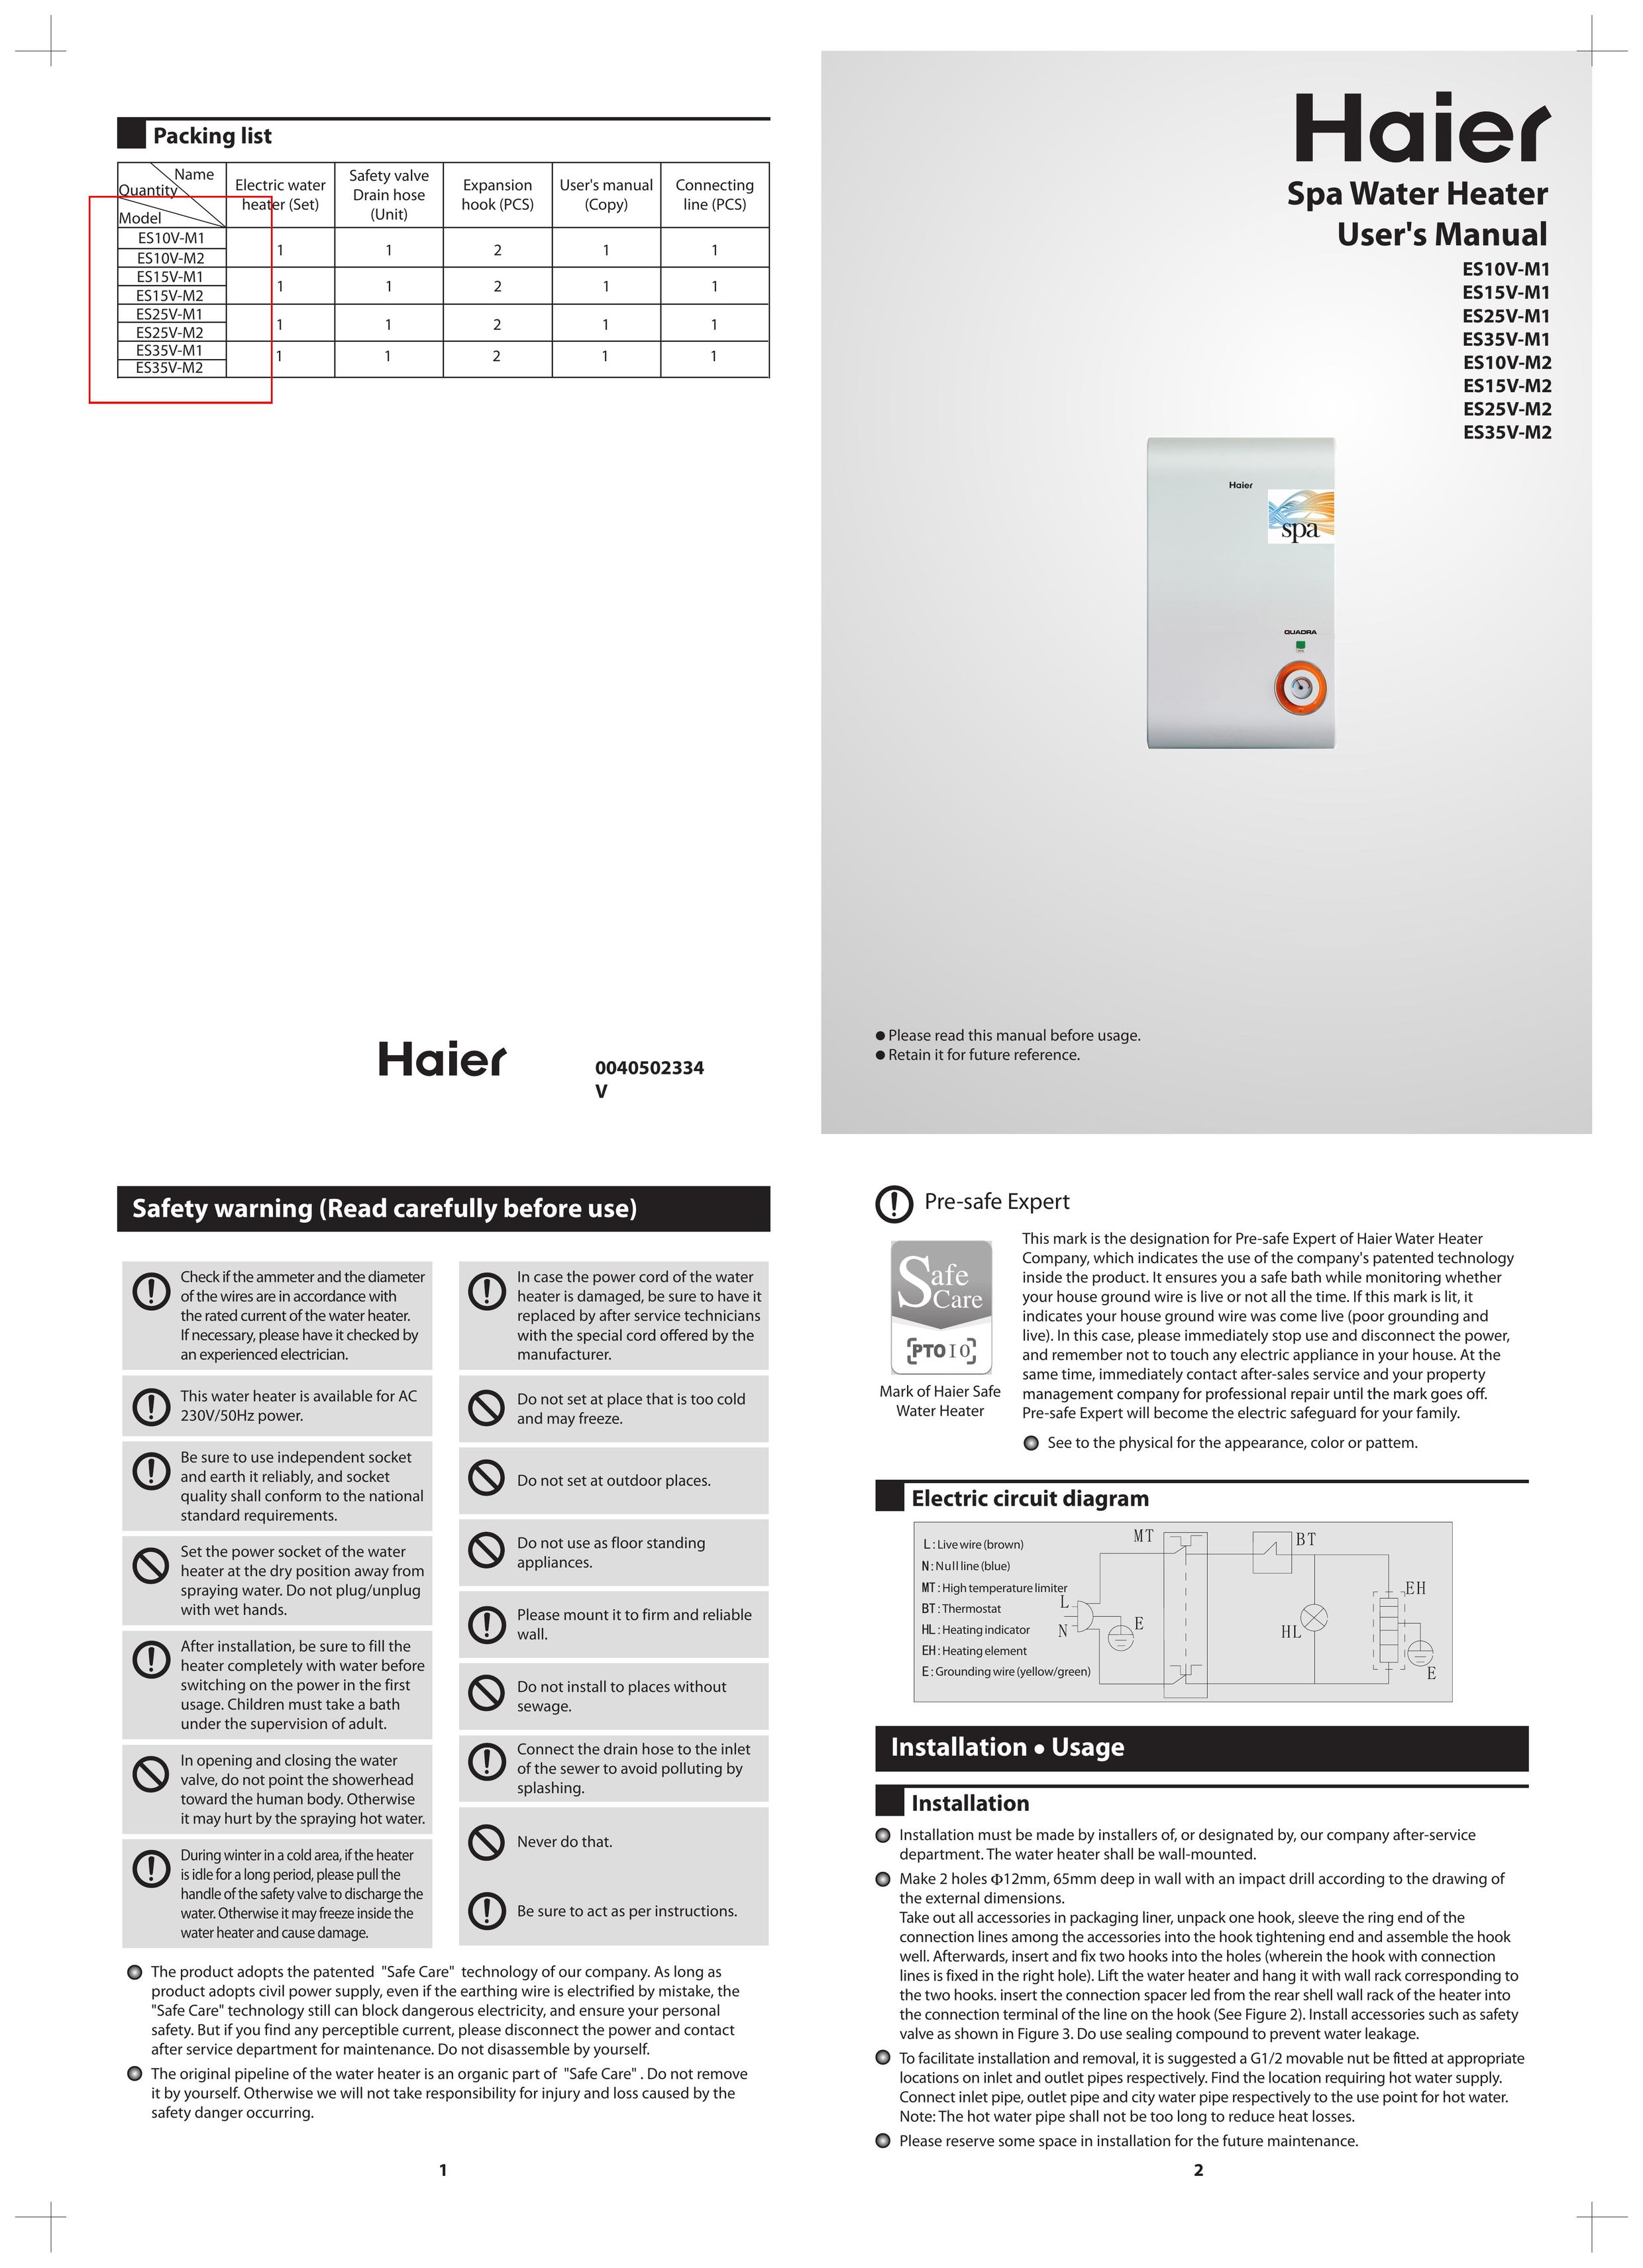 Haier ES25V-M1 Water Heater User Manual